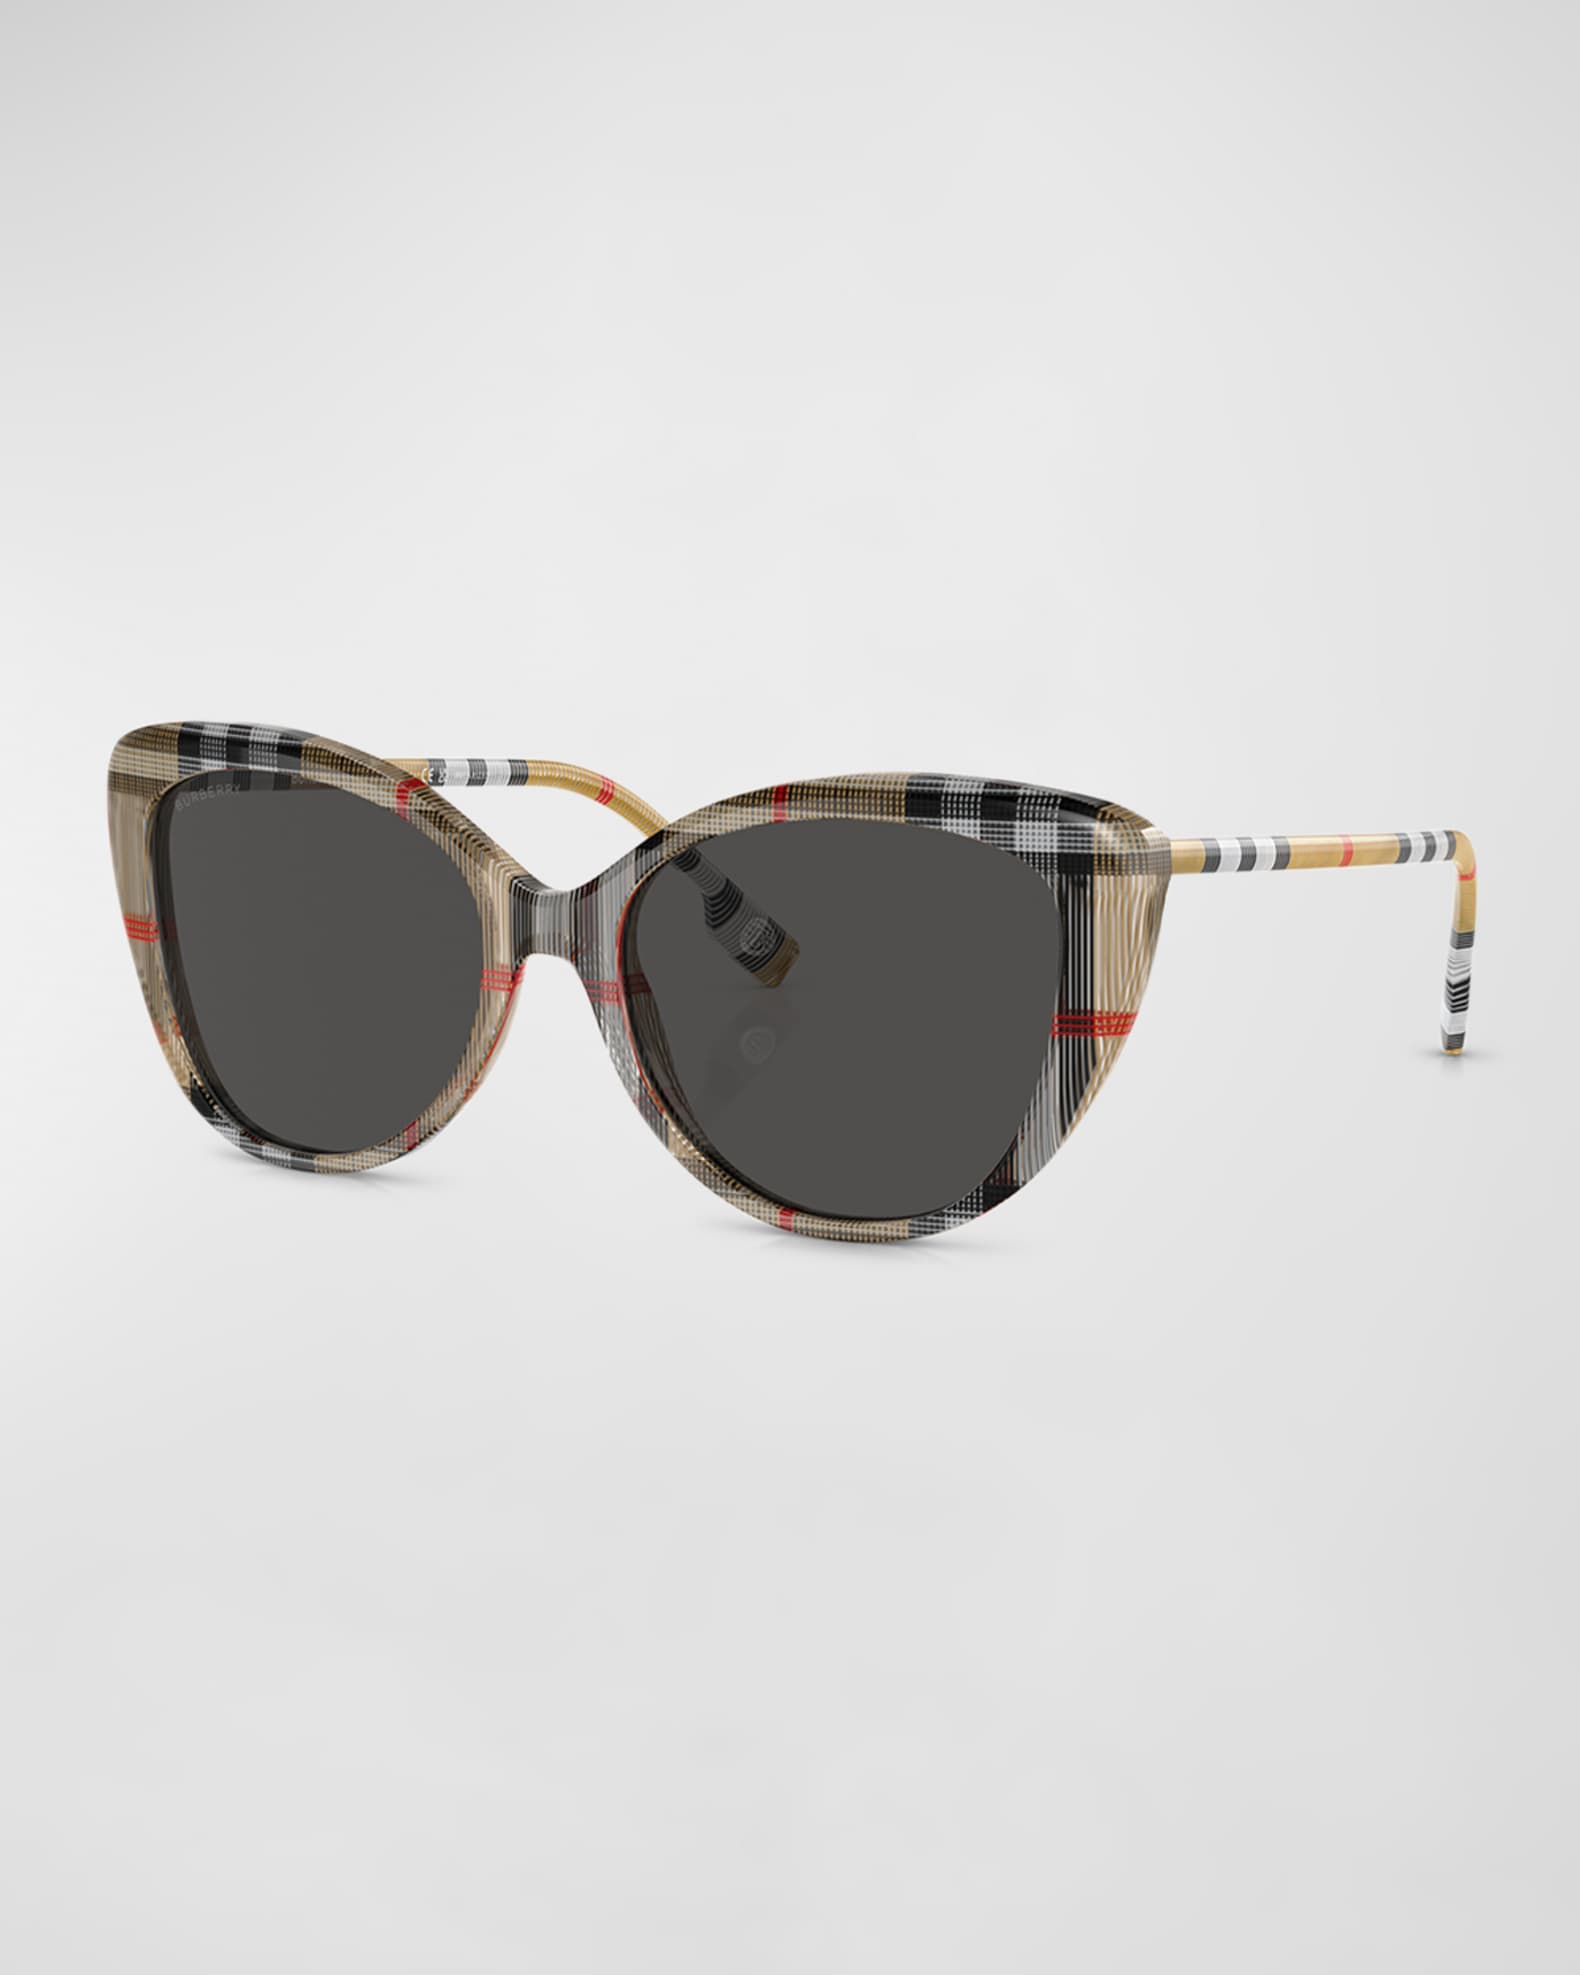 Burberry 54mm Cat Eye Sunglasses in Black